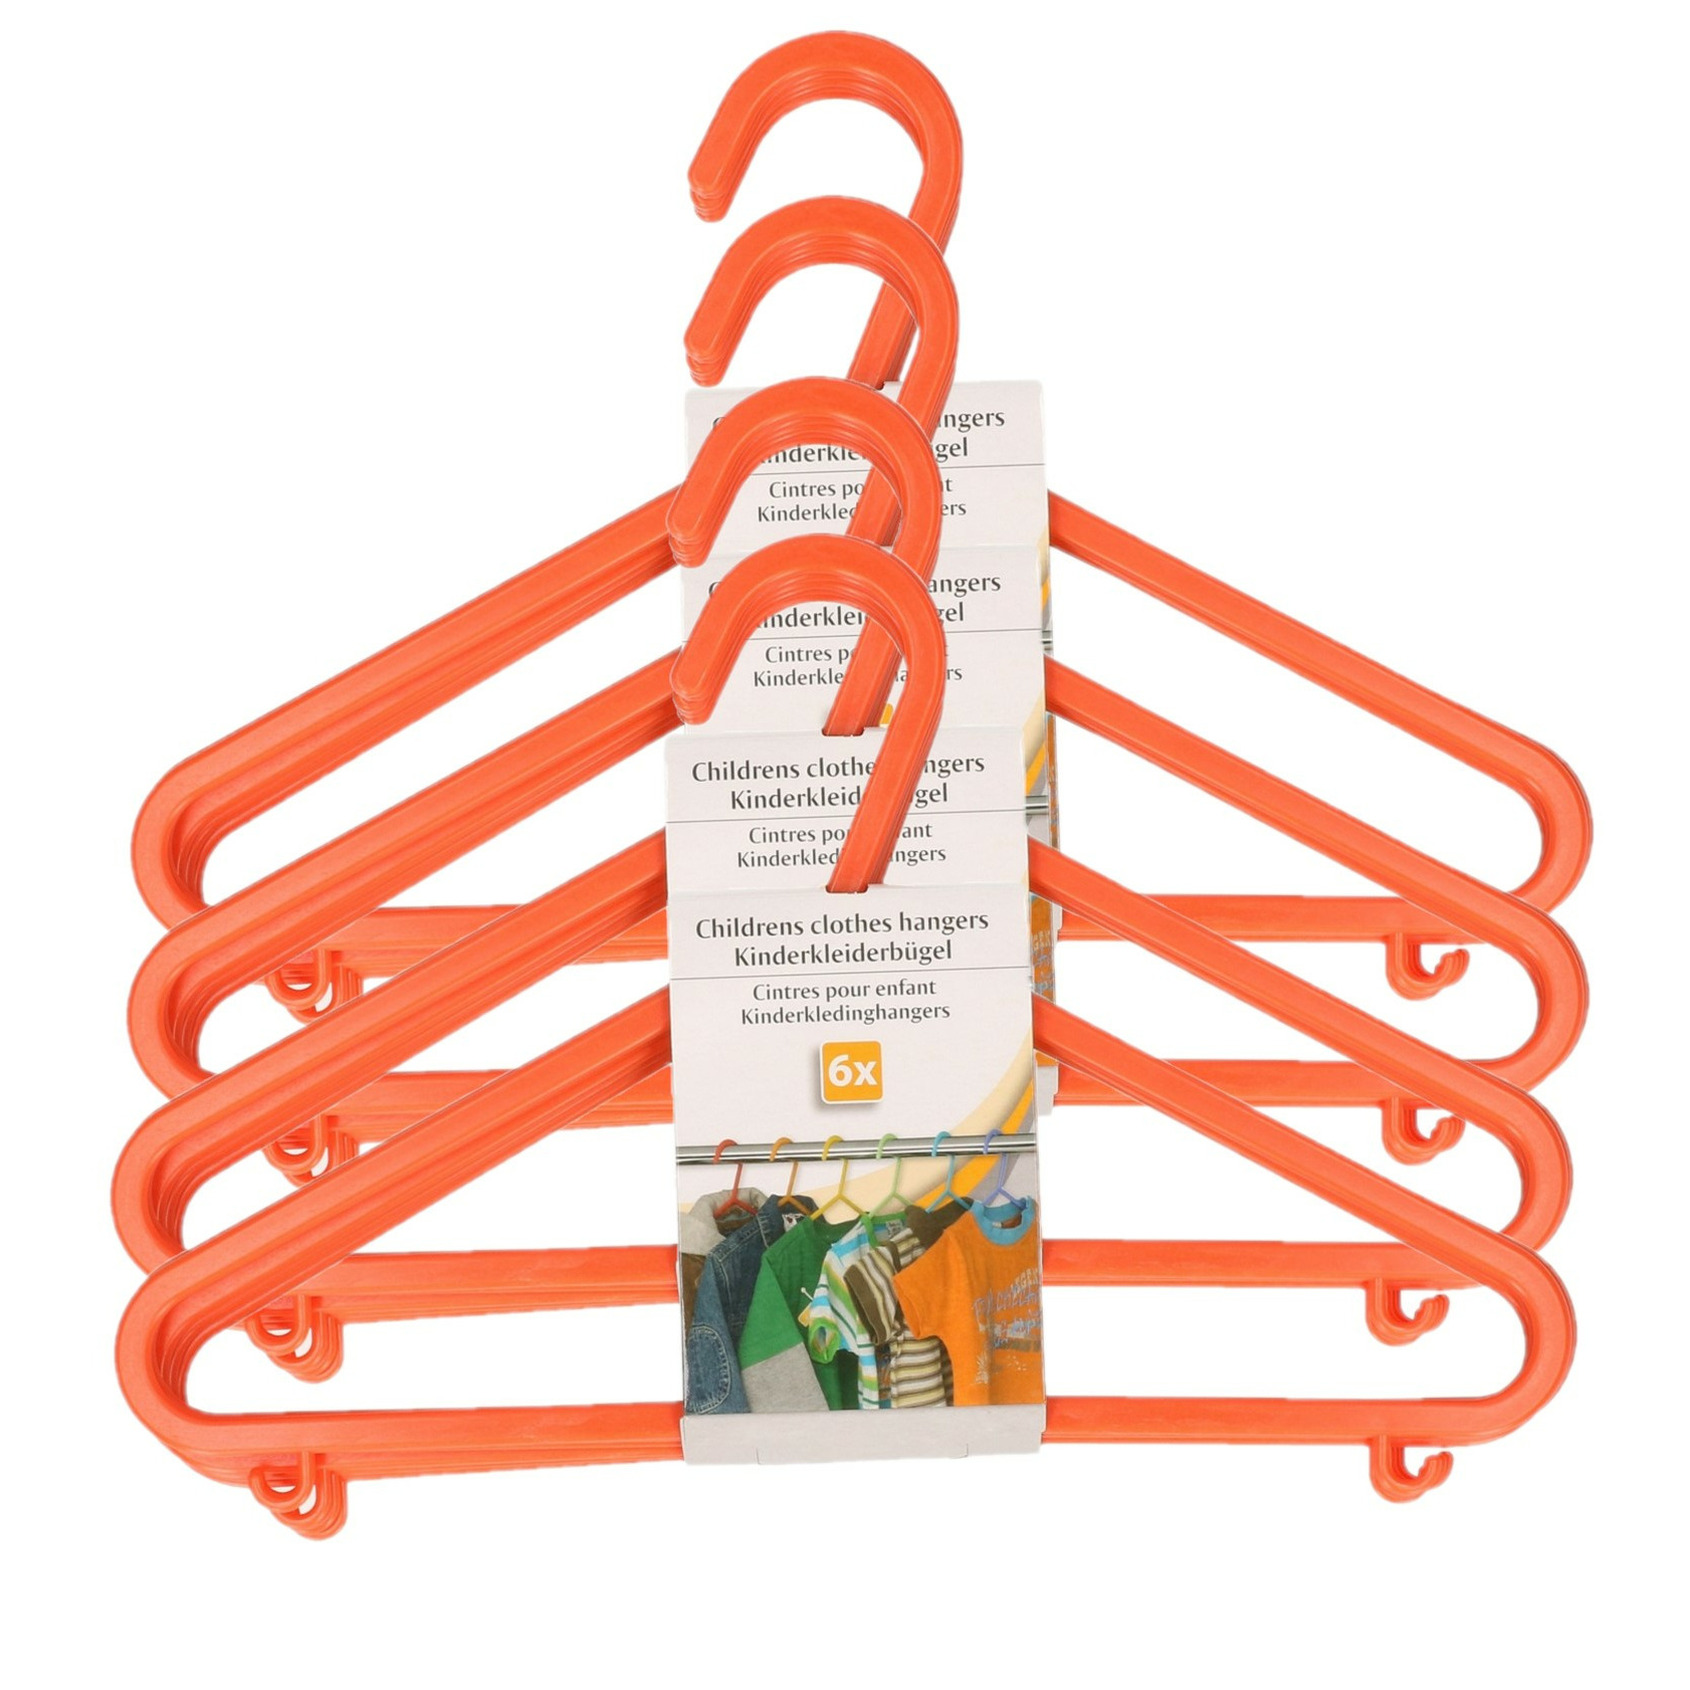 Plastic kinderkleding-baby kledinghangers oranje 36x stuks 17 x 28 cm